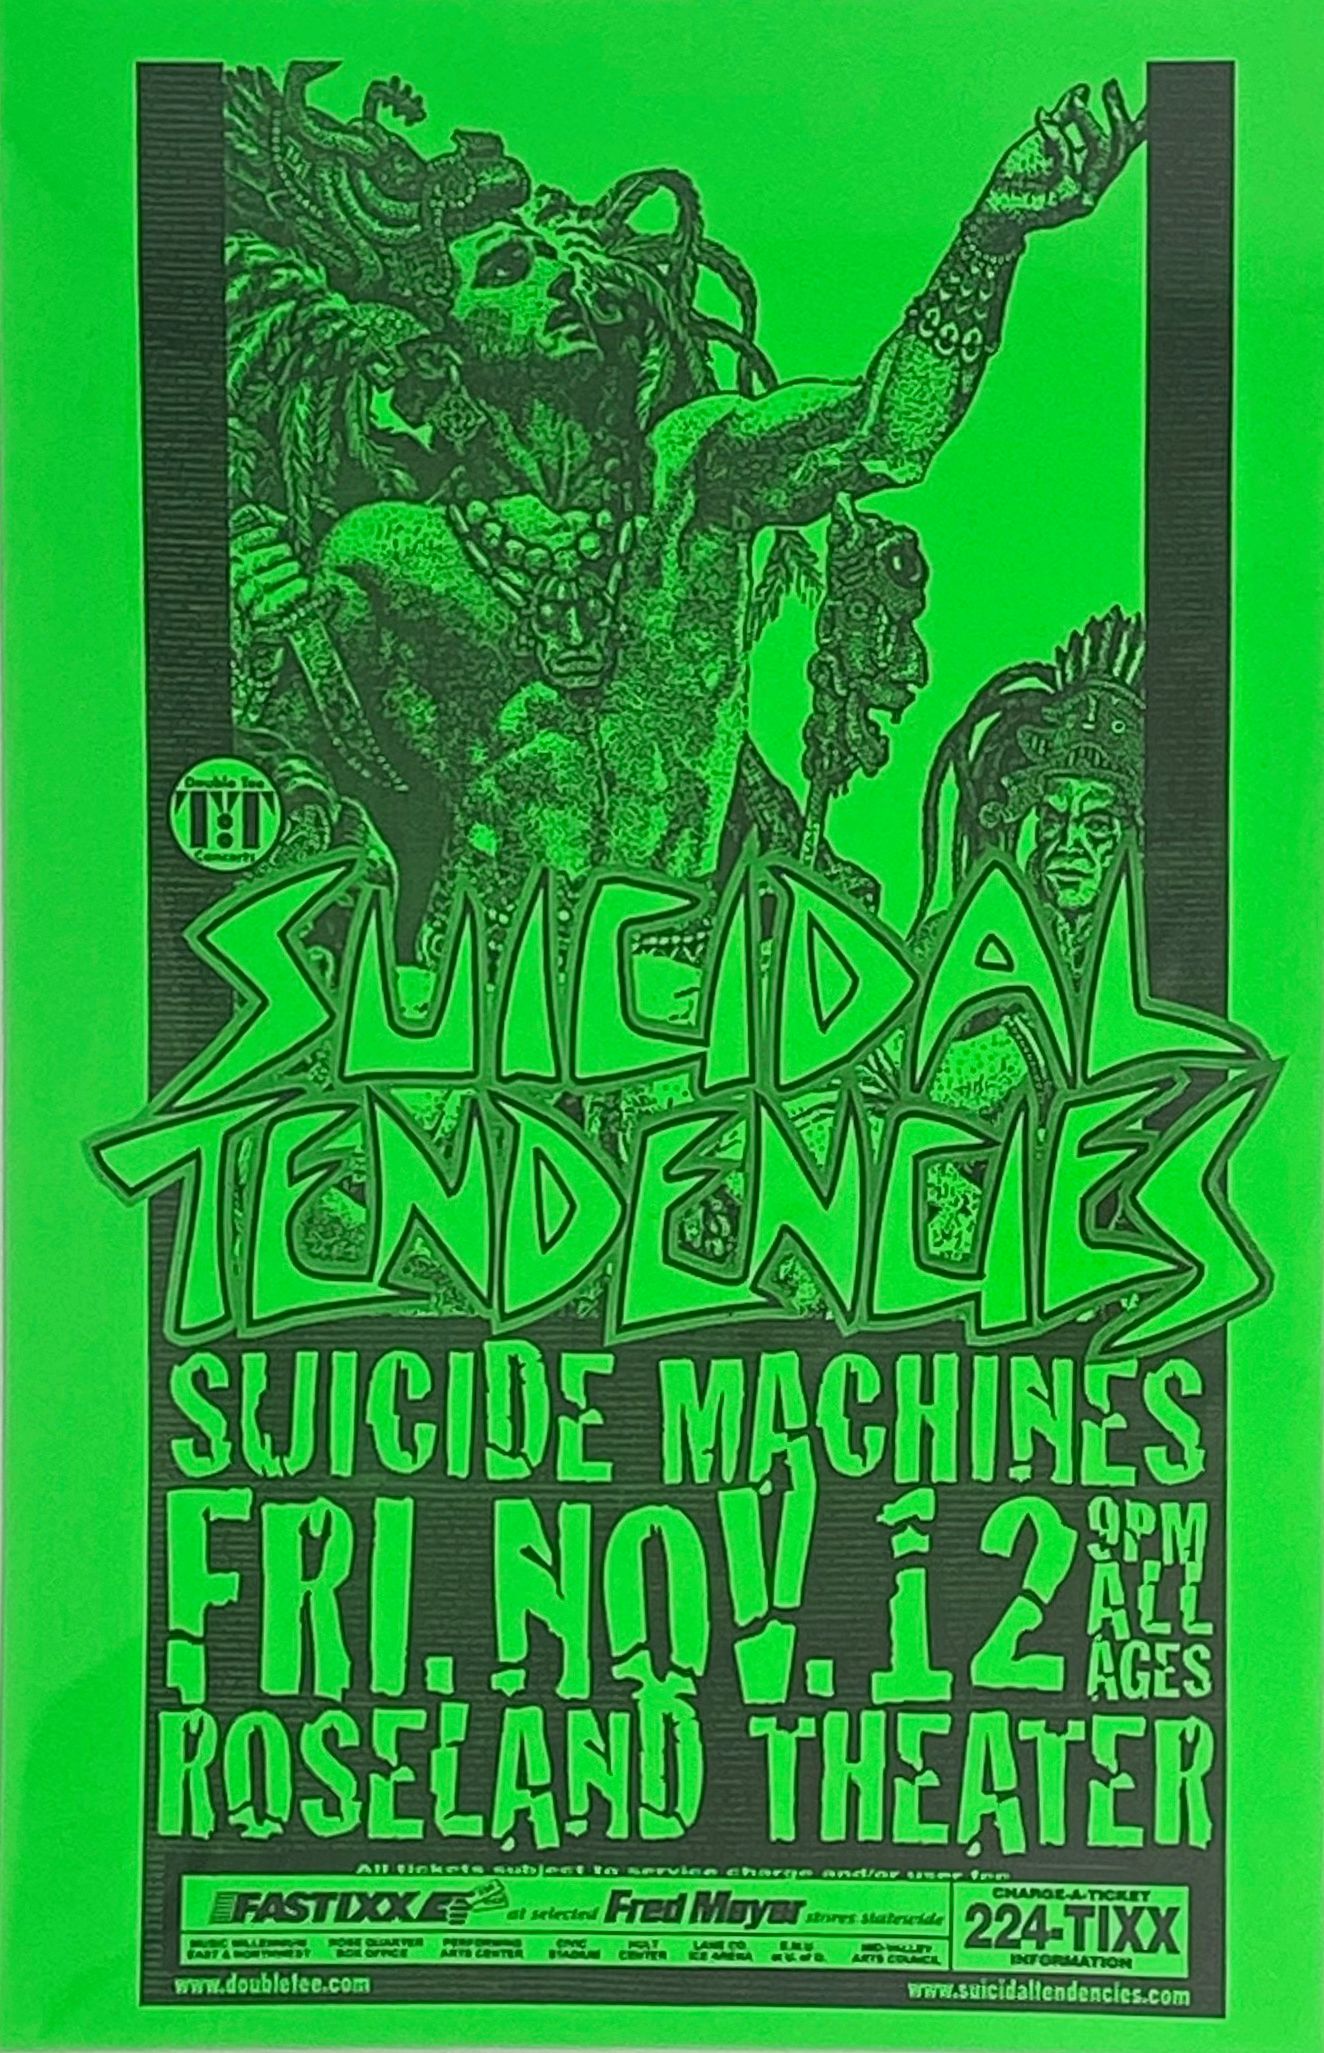 MXP-216.11 Suicidal Tendencies Roseland Theater 1999 Concert Poster